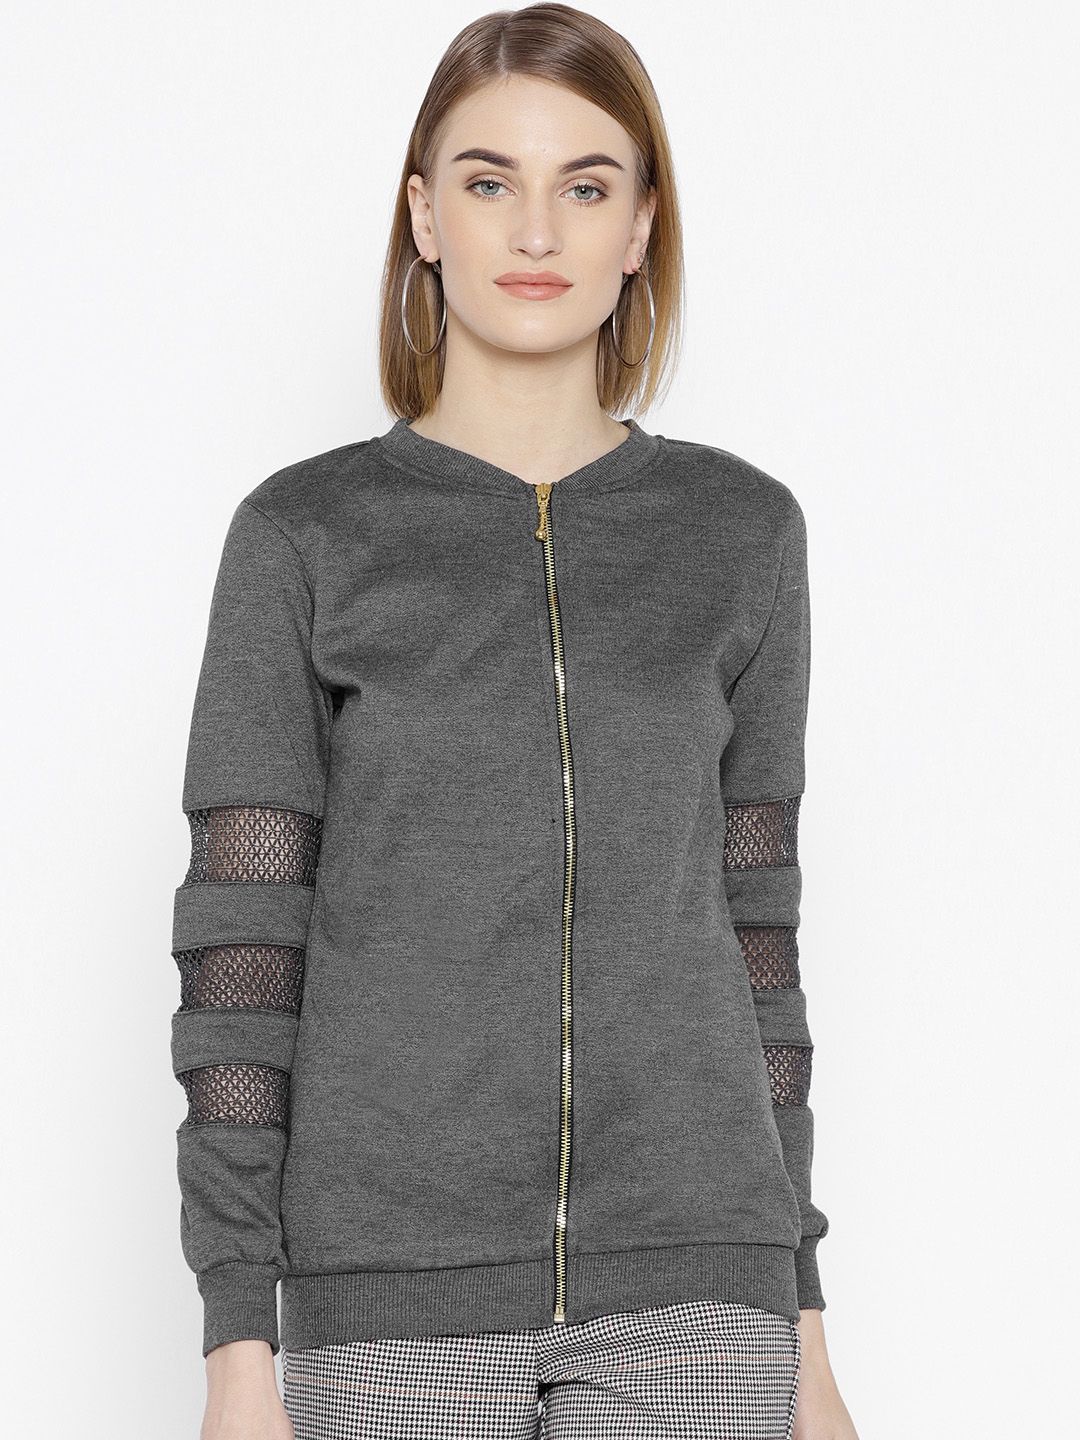 Belle Fille Women Charcoal Grey Solid Sweatshirt Price in India